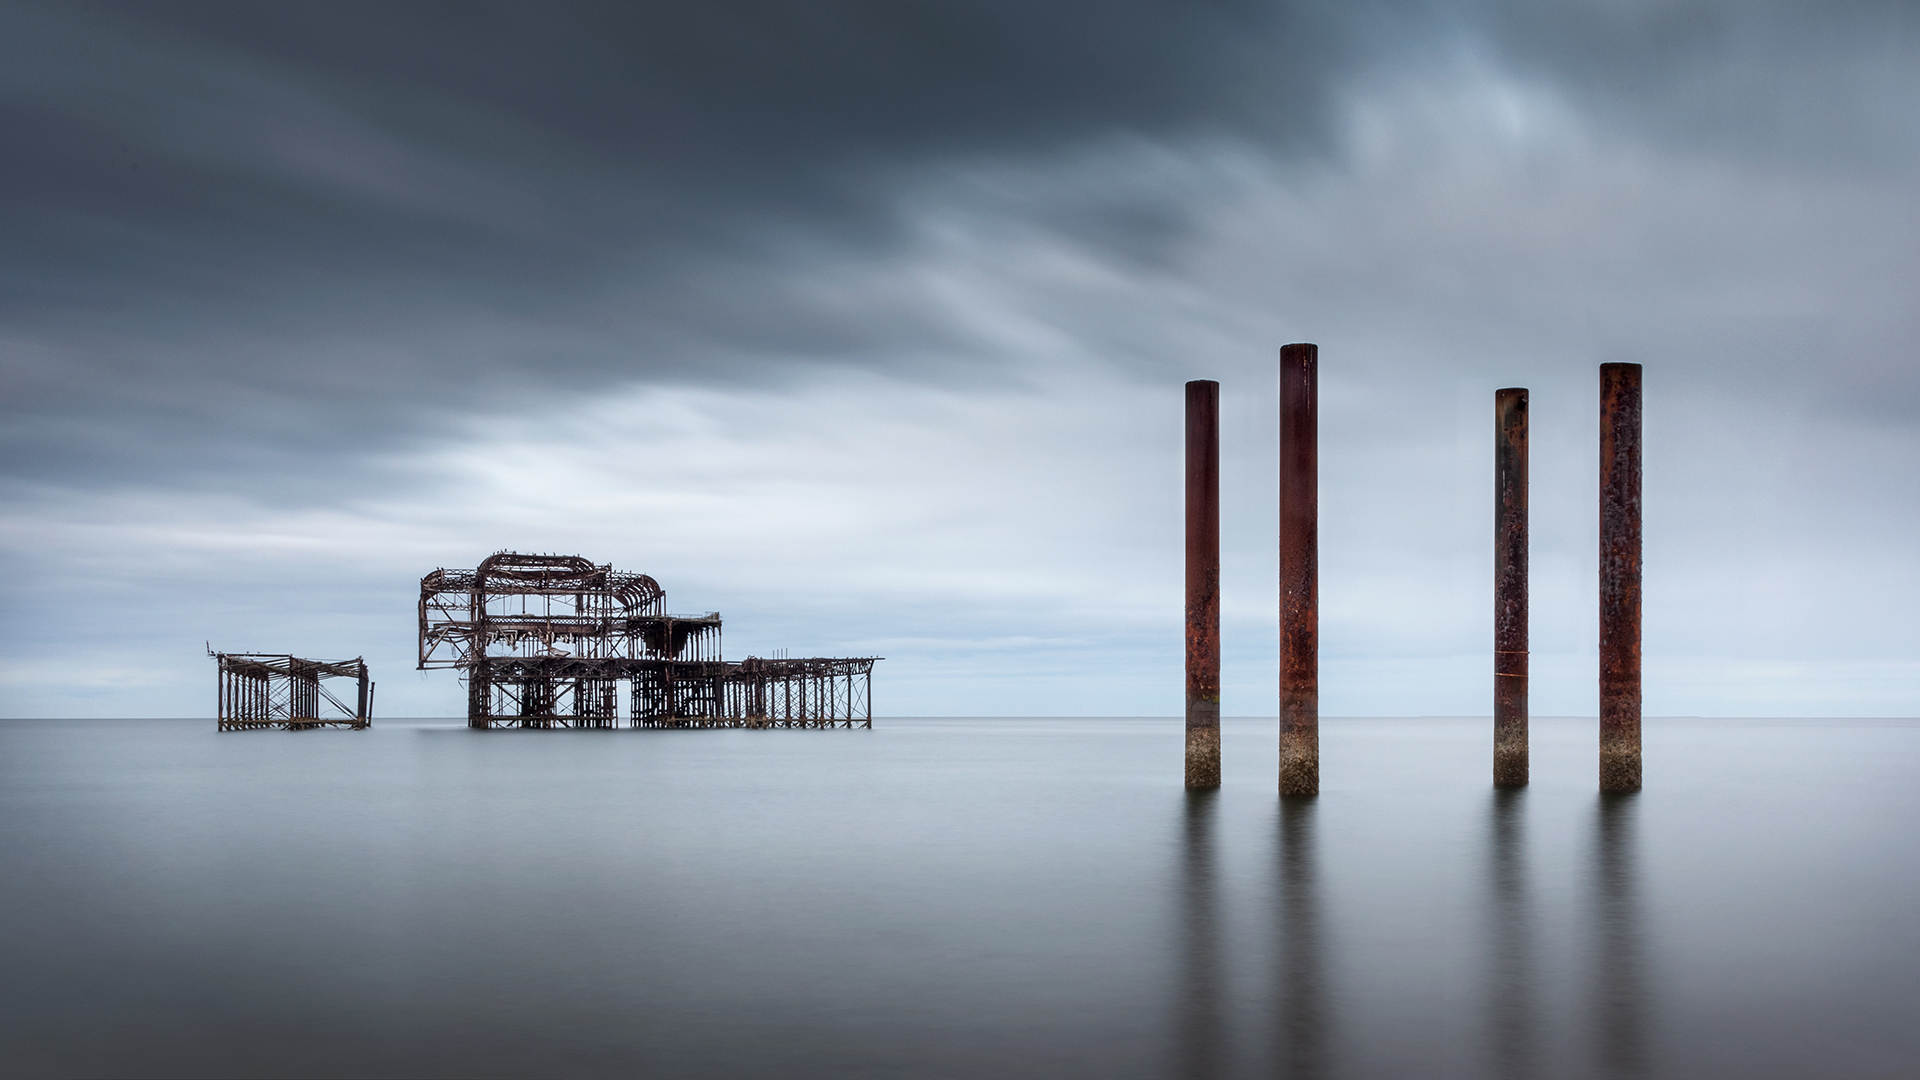 The old Pier in Brighton